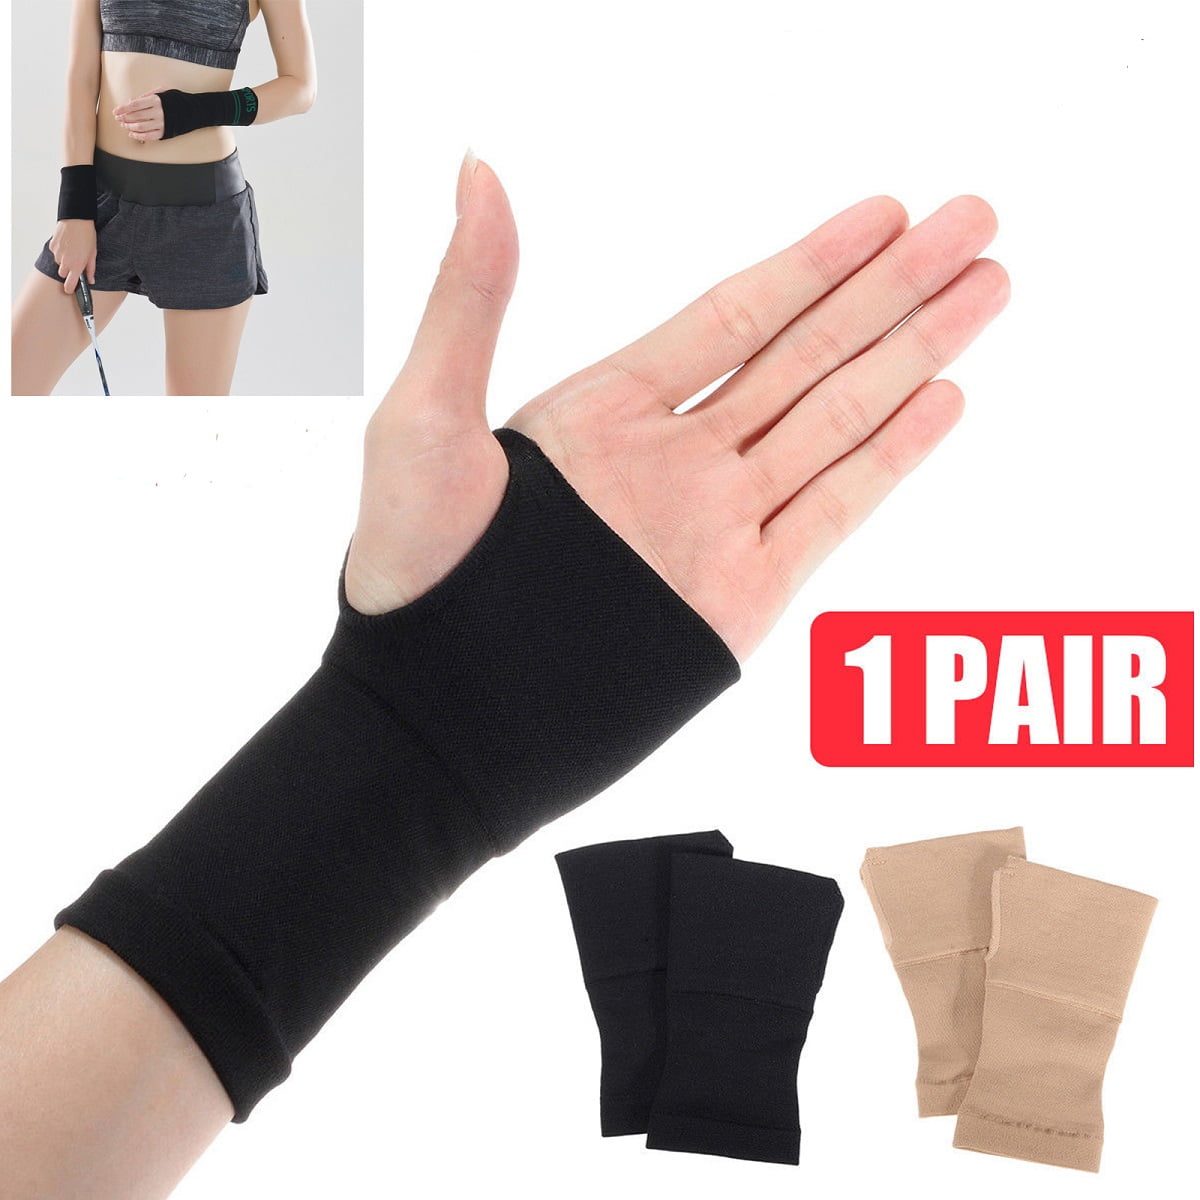 Elastic Wrist Gloves Hand Palm Arthritis Brace Support Pain Relief Sleeve Wrap 